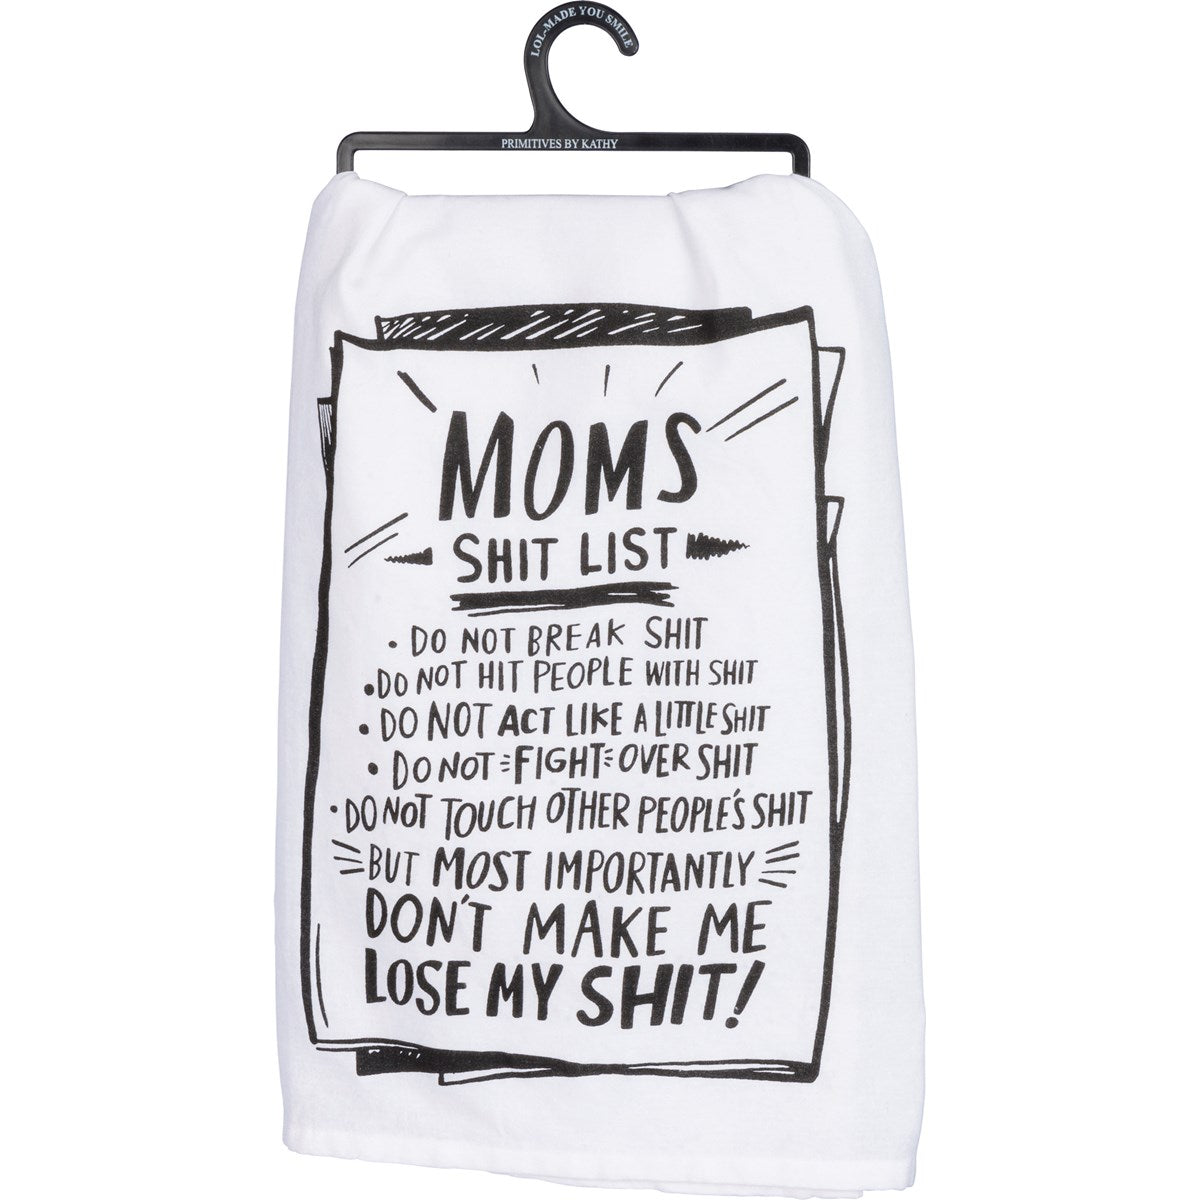 Mom's List Don't Make Me Kitchen Towel